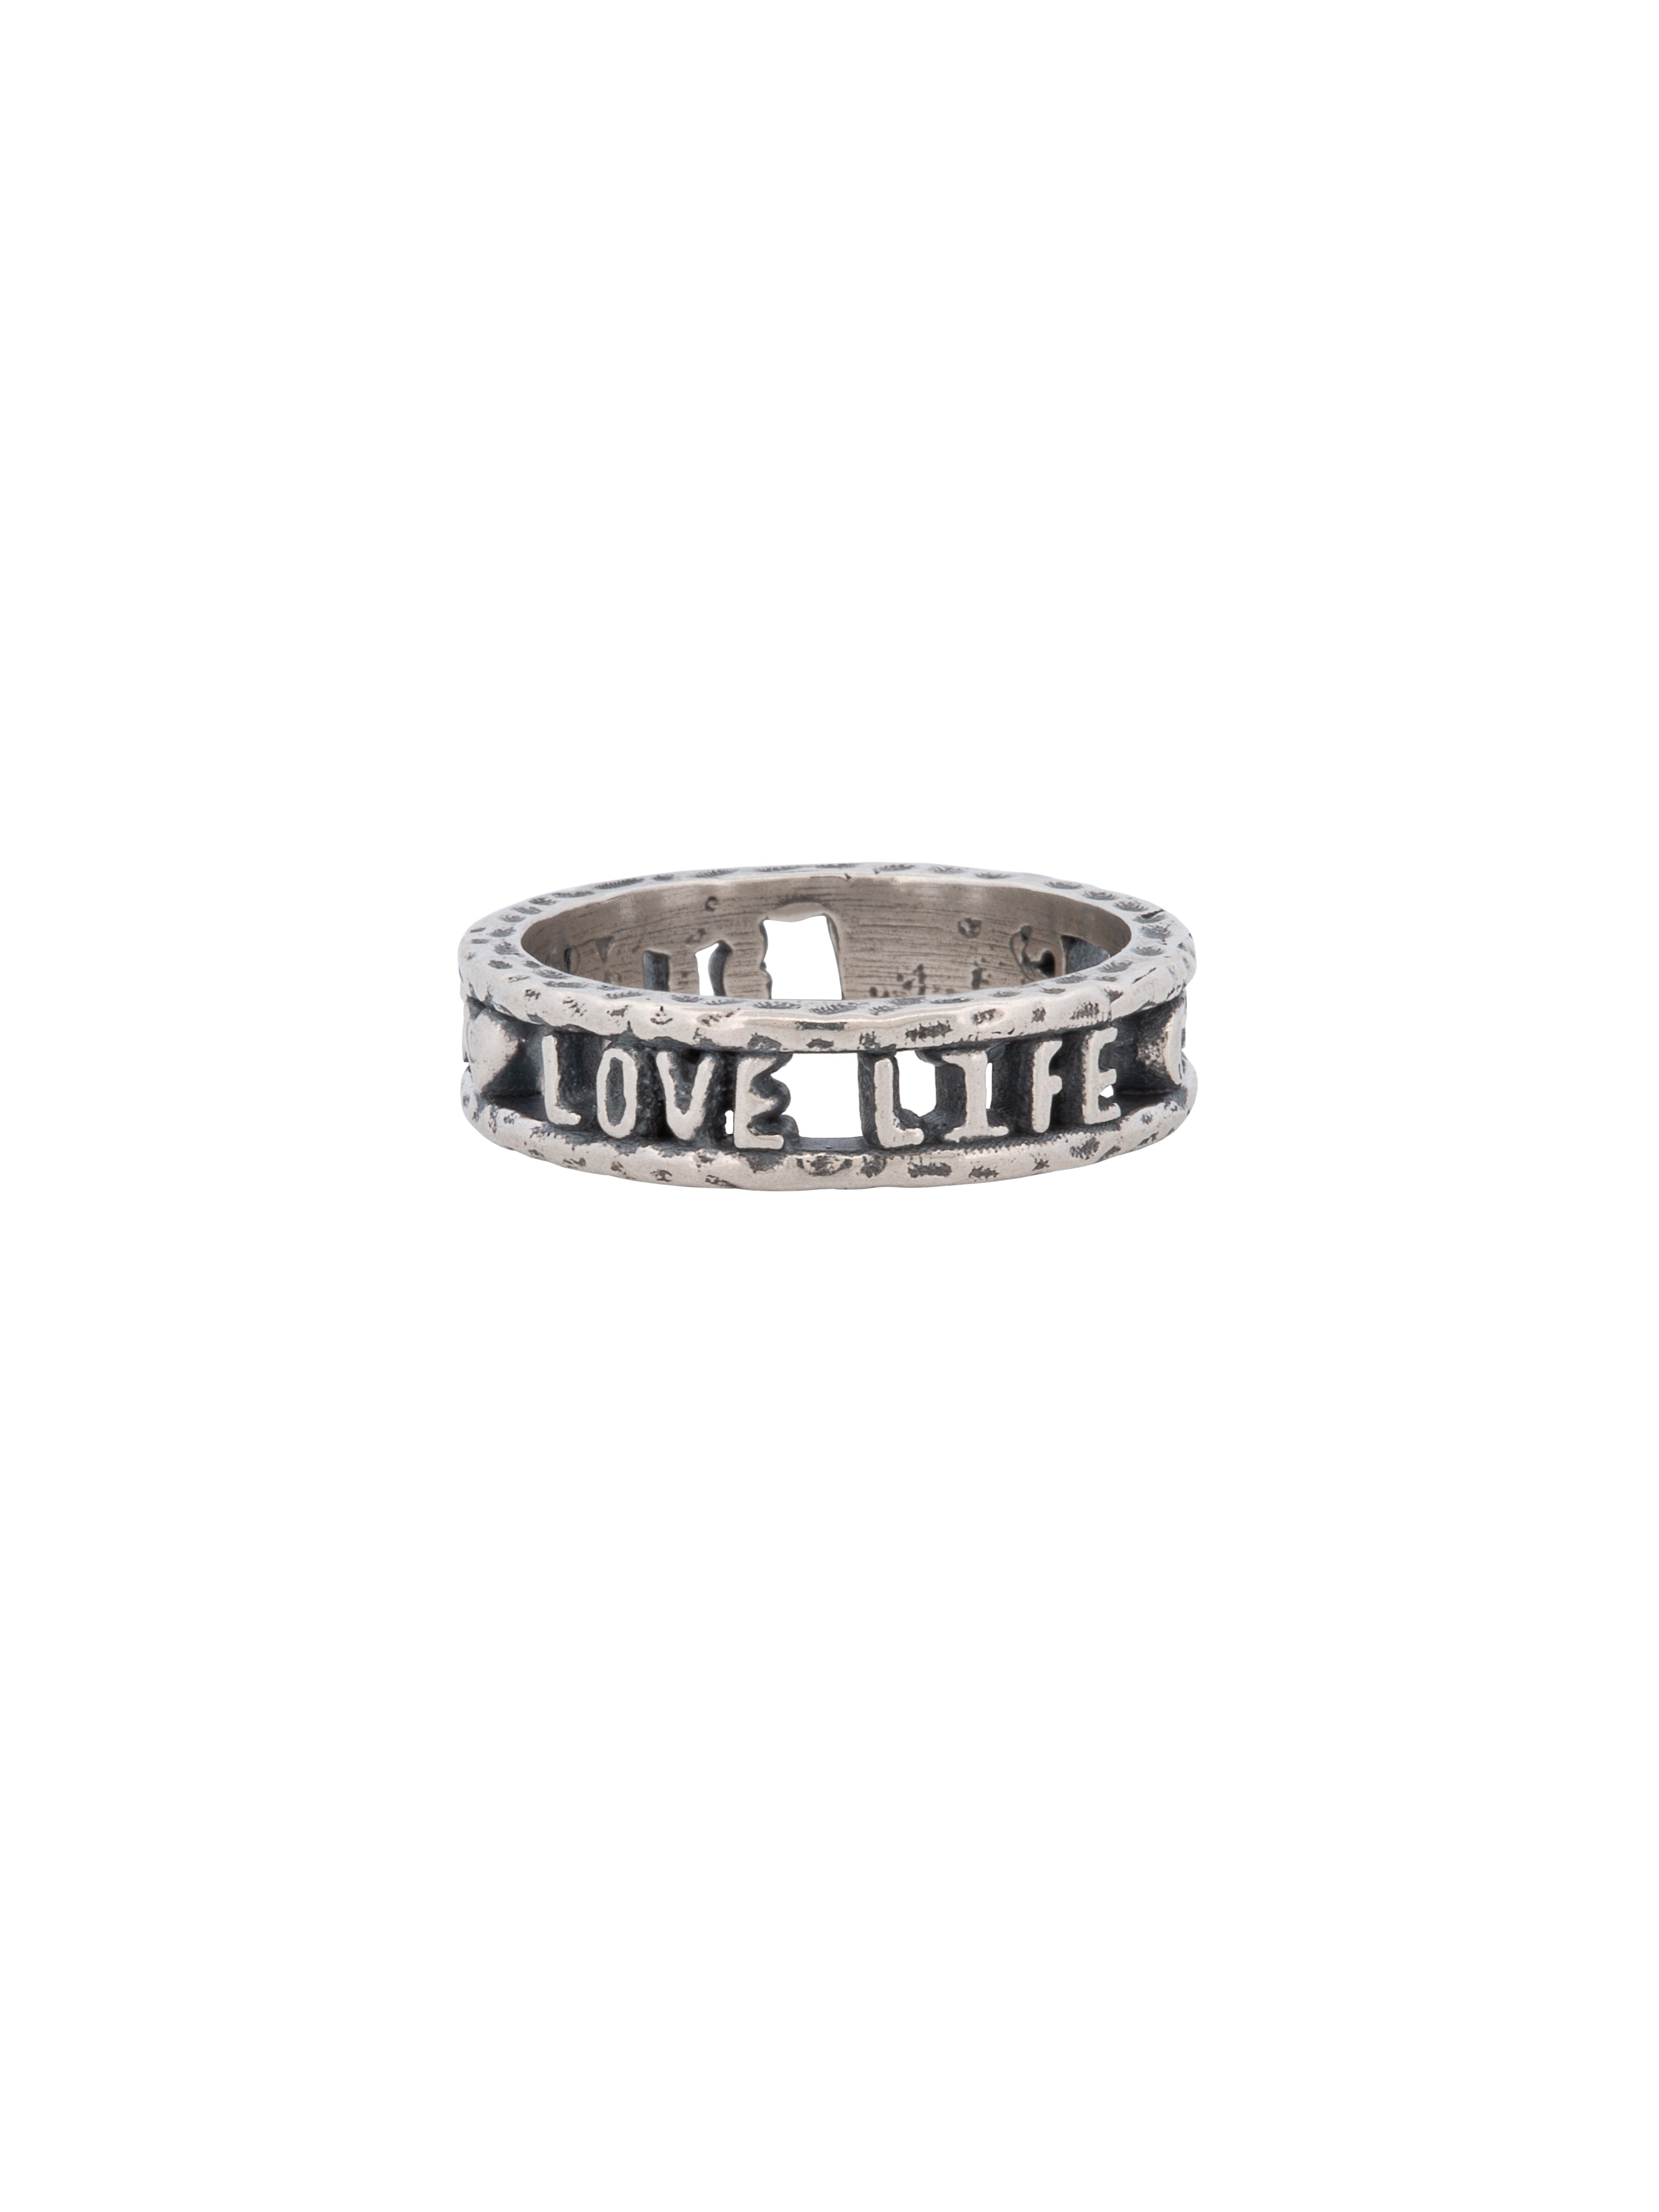 Love Life Ring